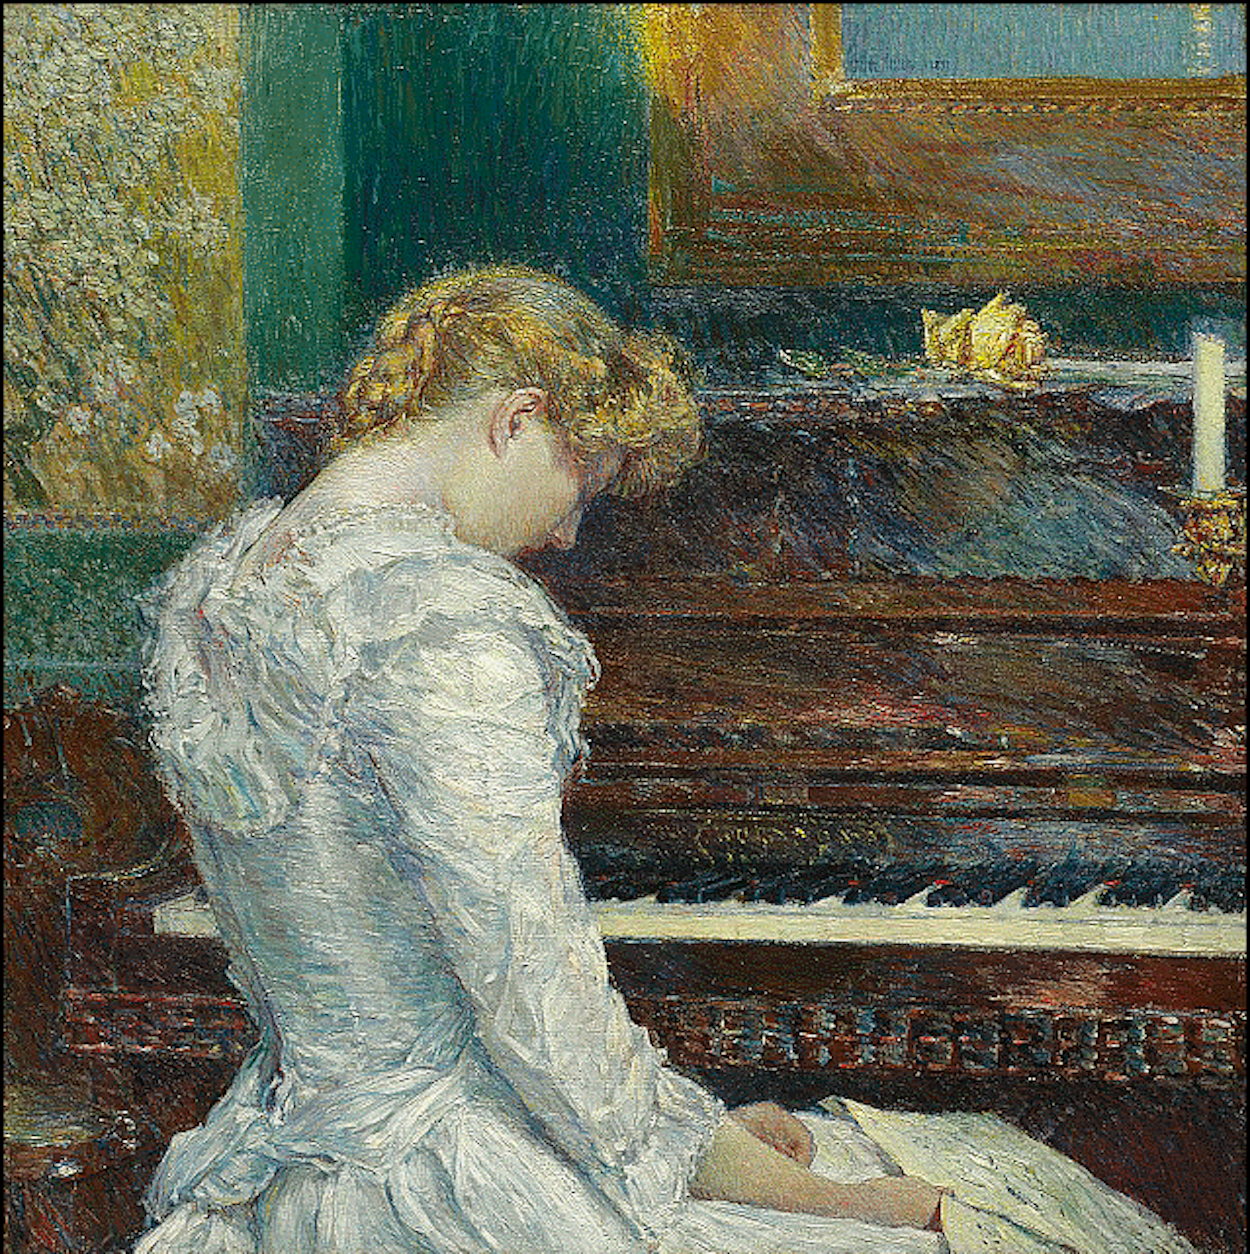 De Sonate by Frederick Childe Hassam - 1893 - 81.44 x 81.44 cm 